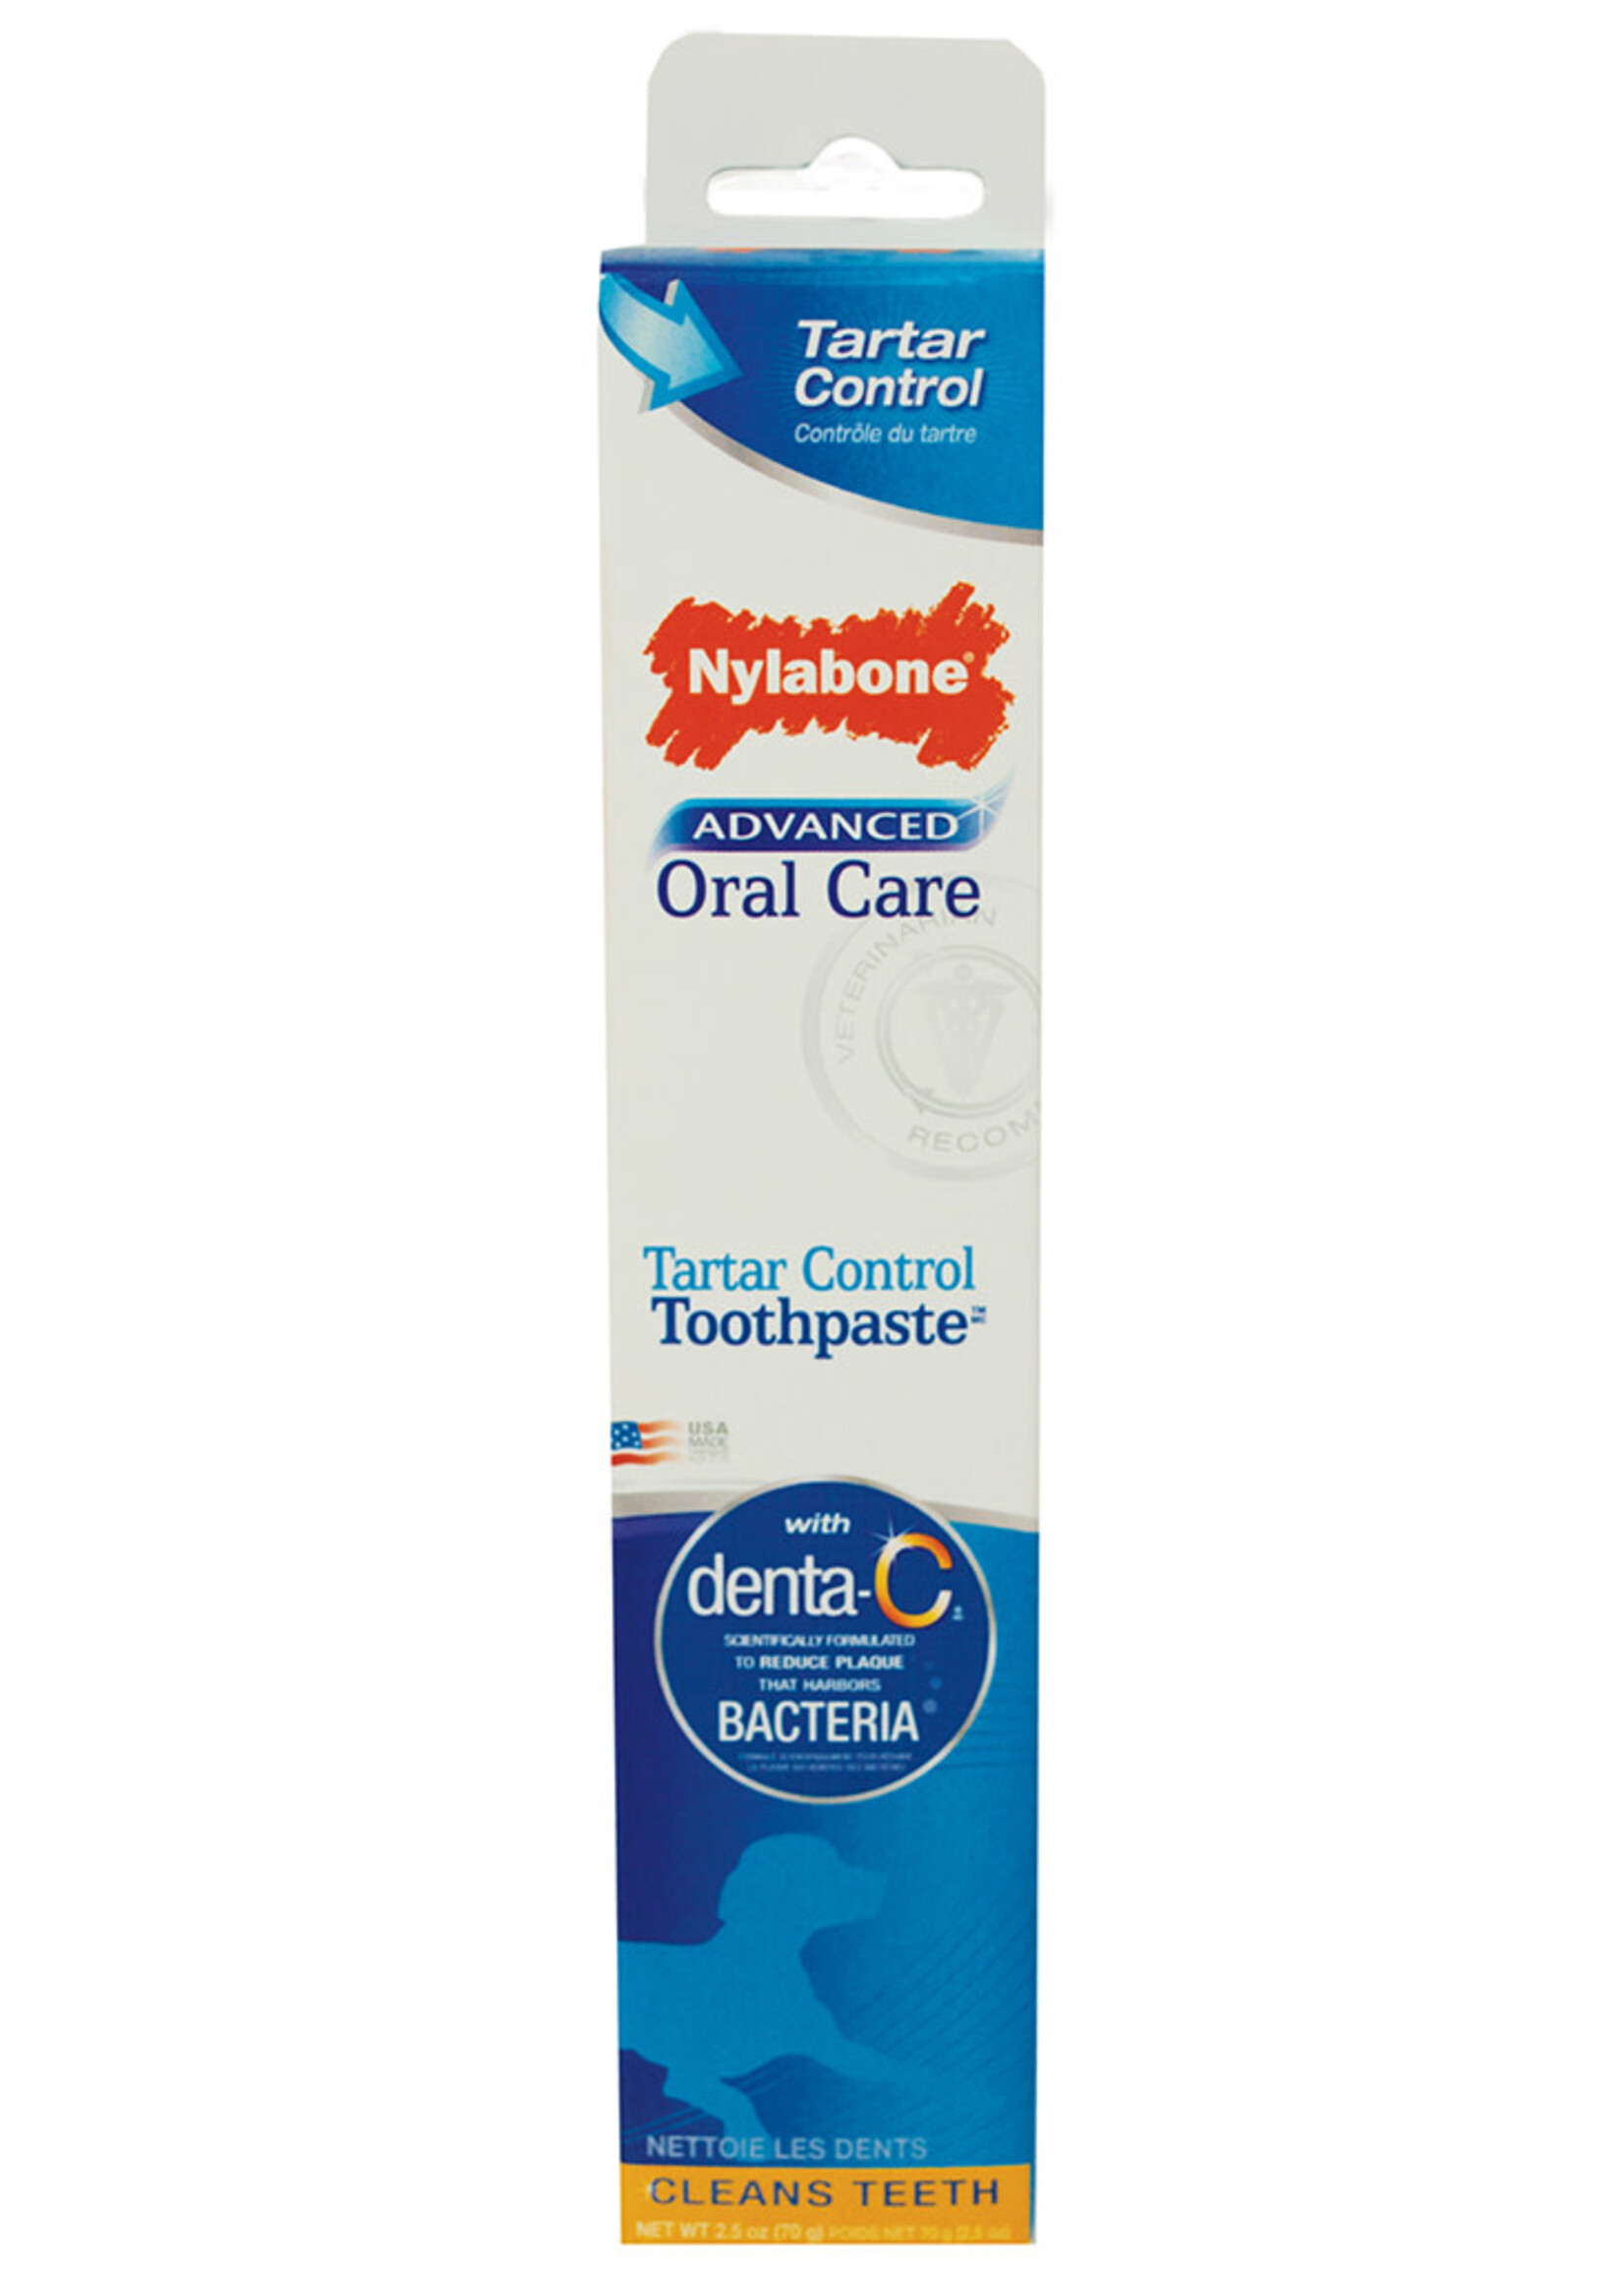 Nylabone Advance Oralcare Tartar Control Toothpaste